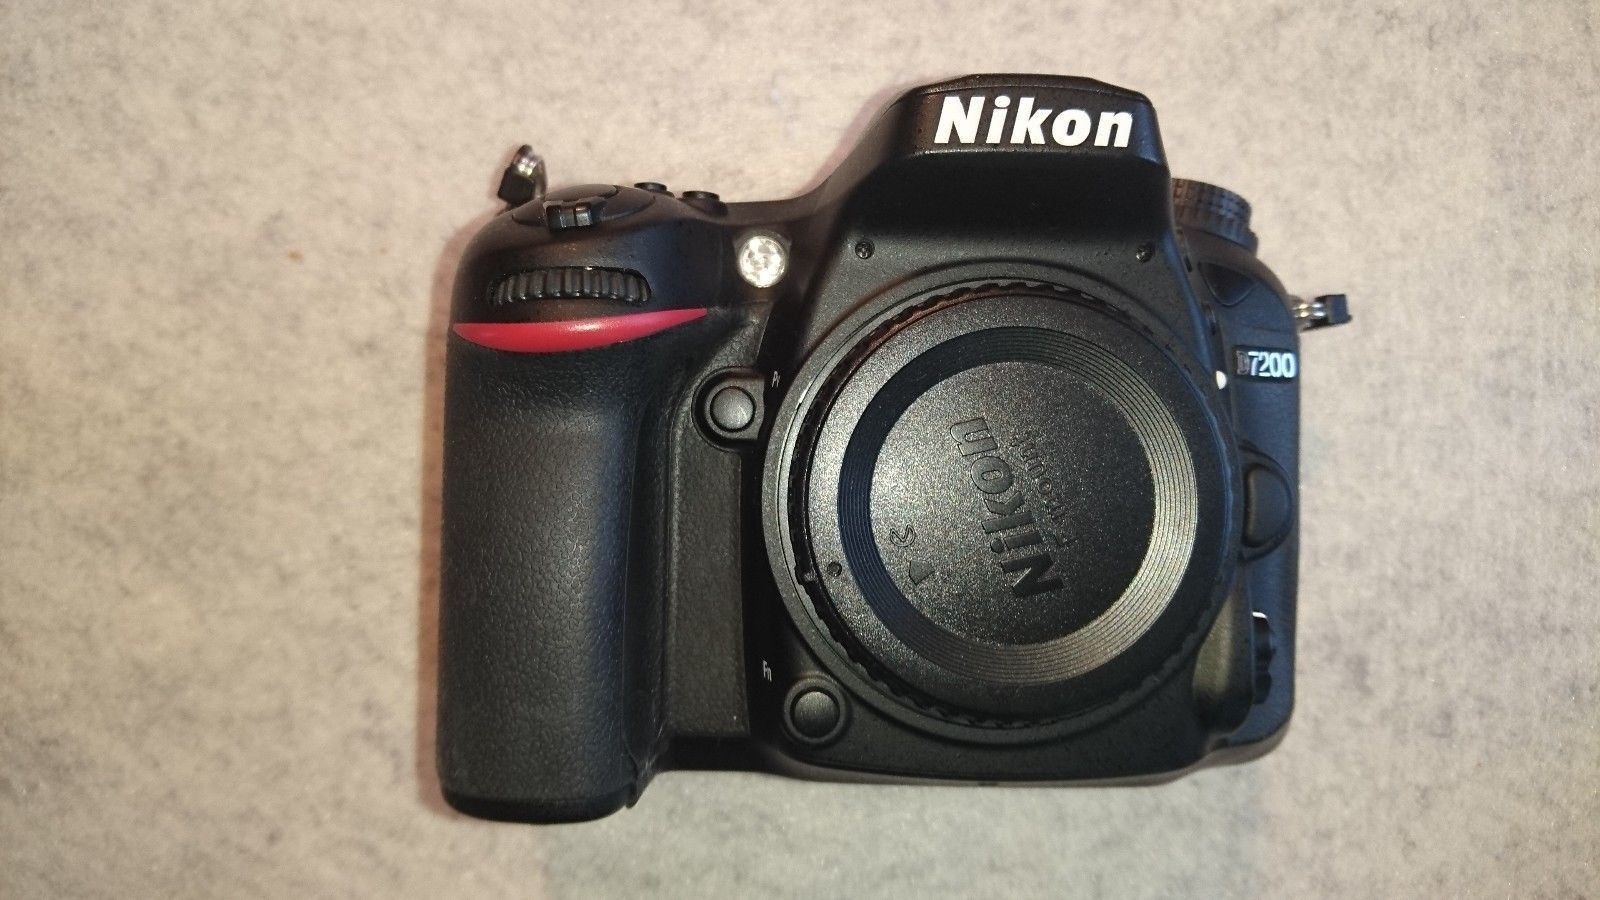 Nikon D7200 24.2 MP SLR-Digitalkamera - nur Gehäuse, mit Restgarantie